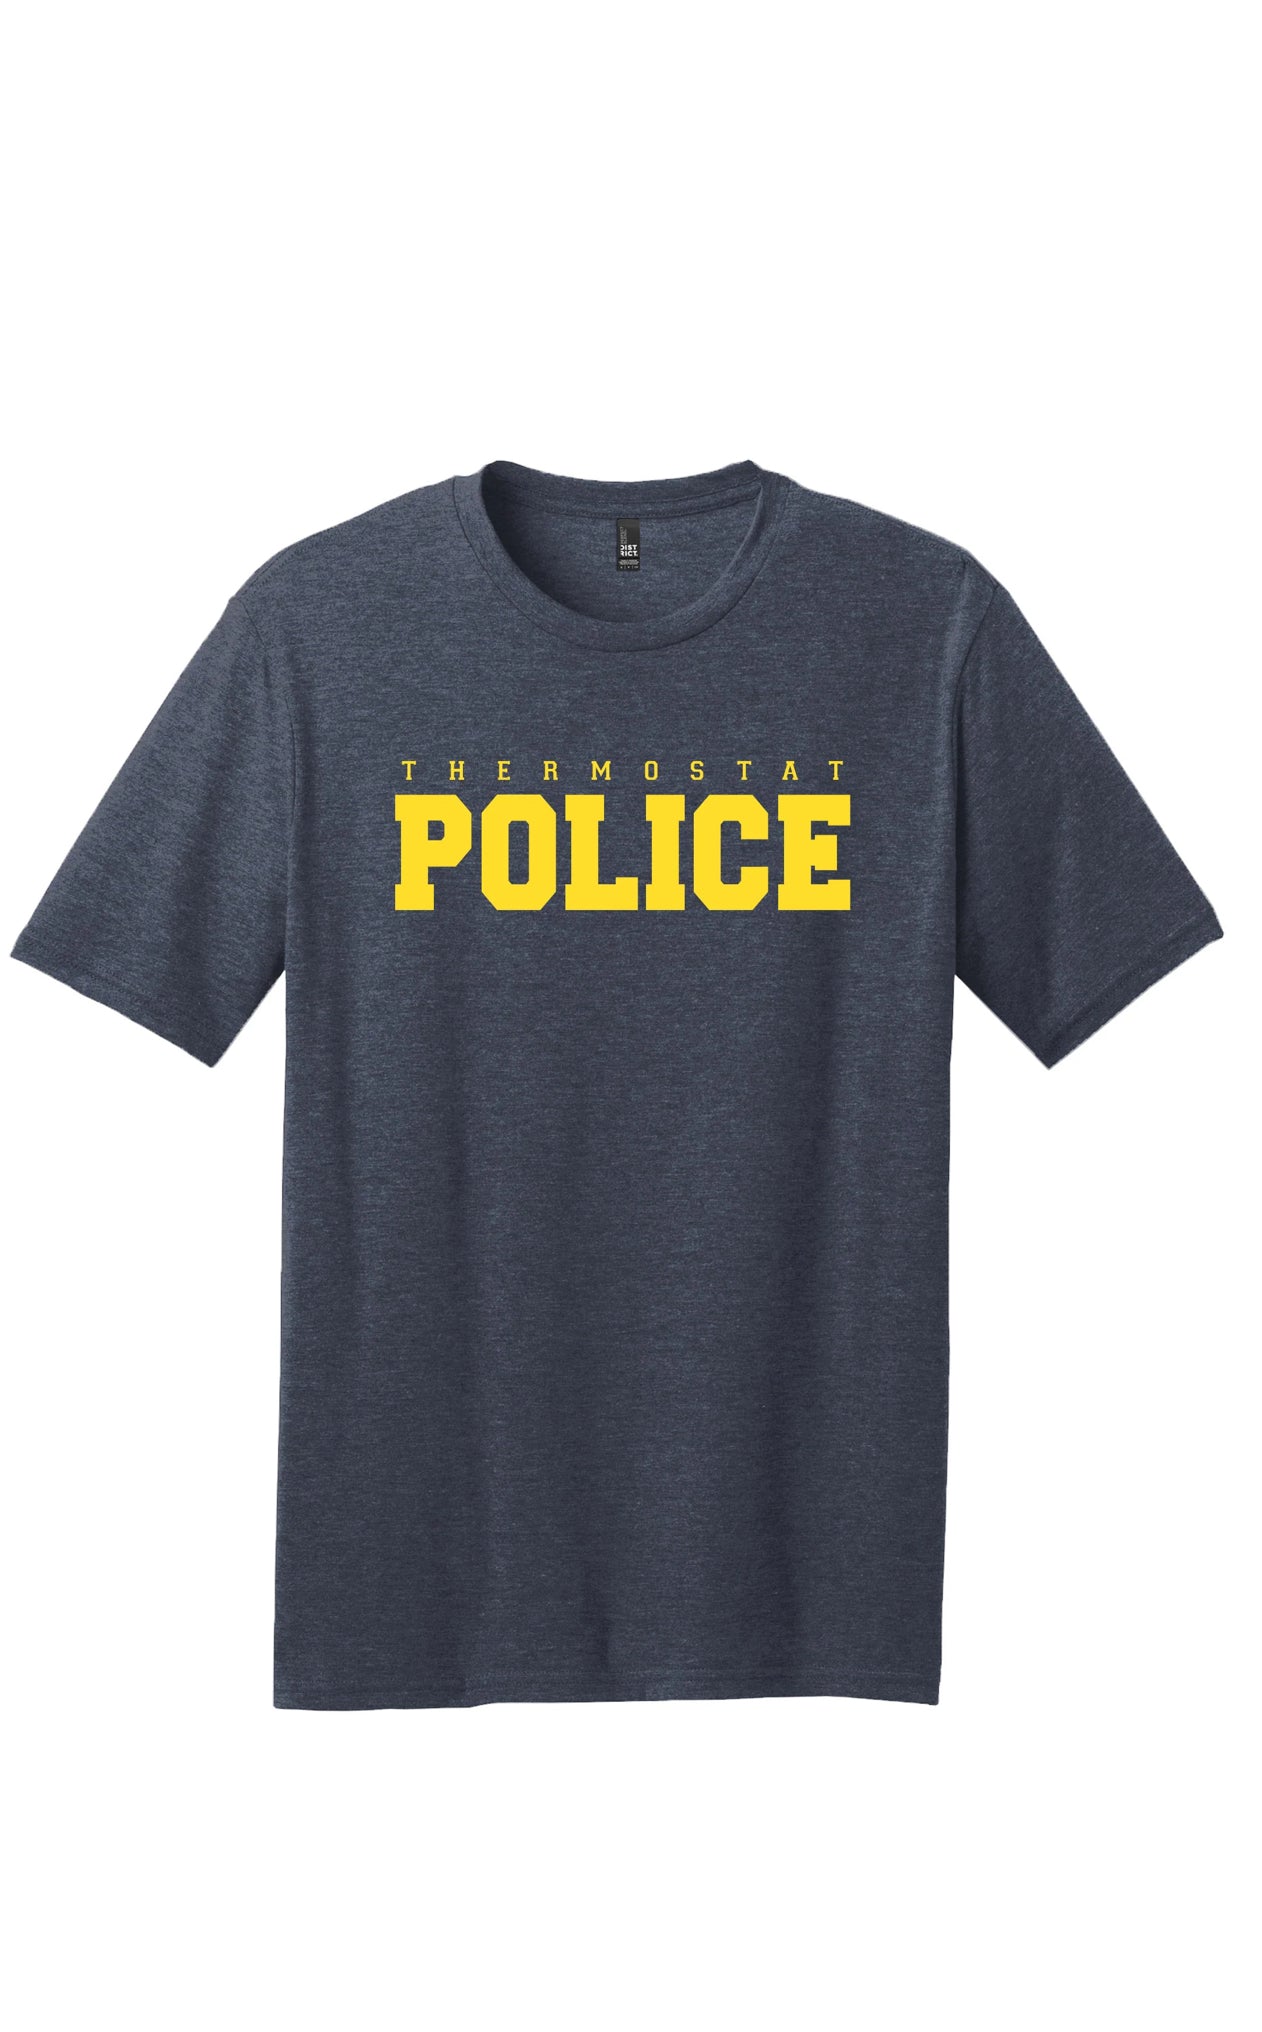 Thermostat Police Shirt (Navy)